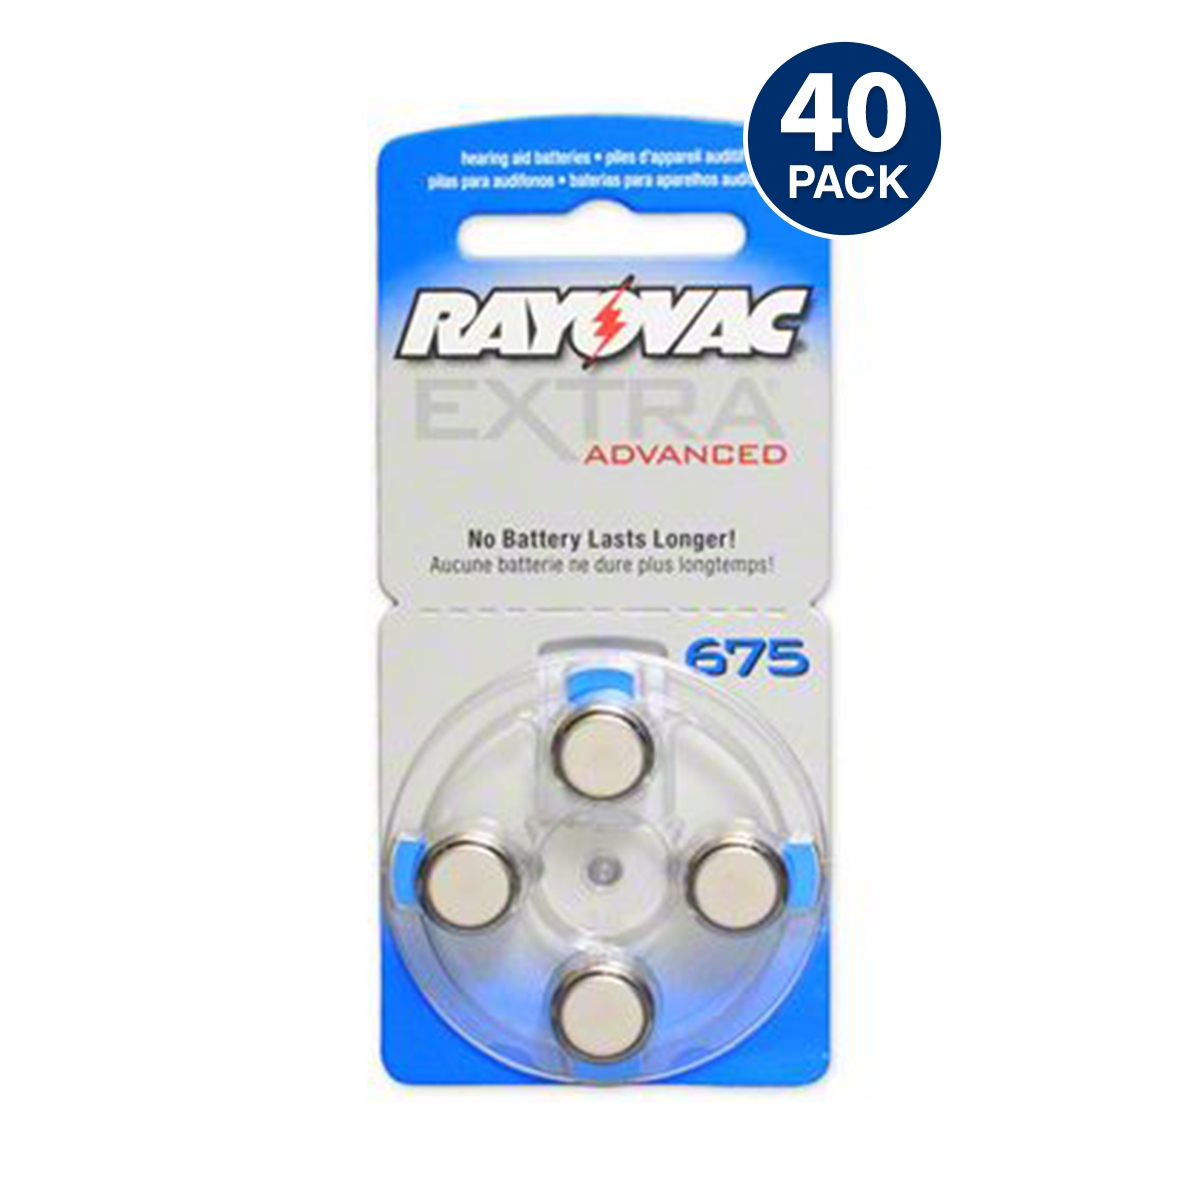 Rayovac 675 Hearing Aid Battery (40-Pack)